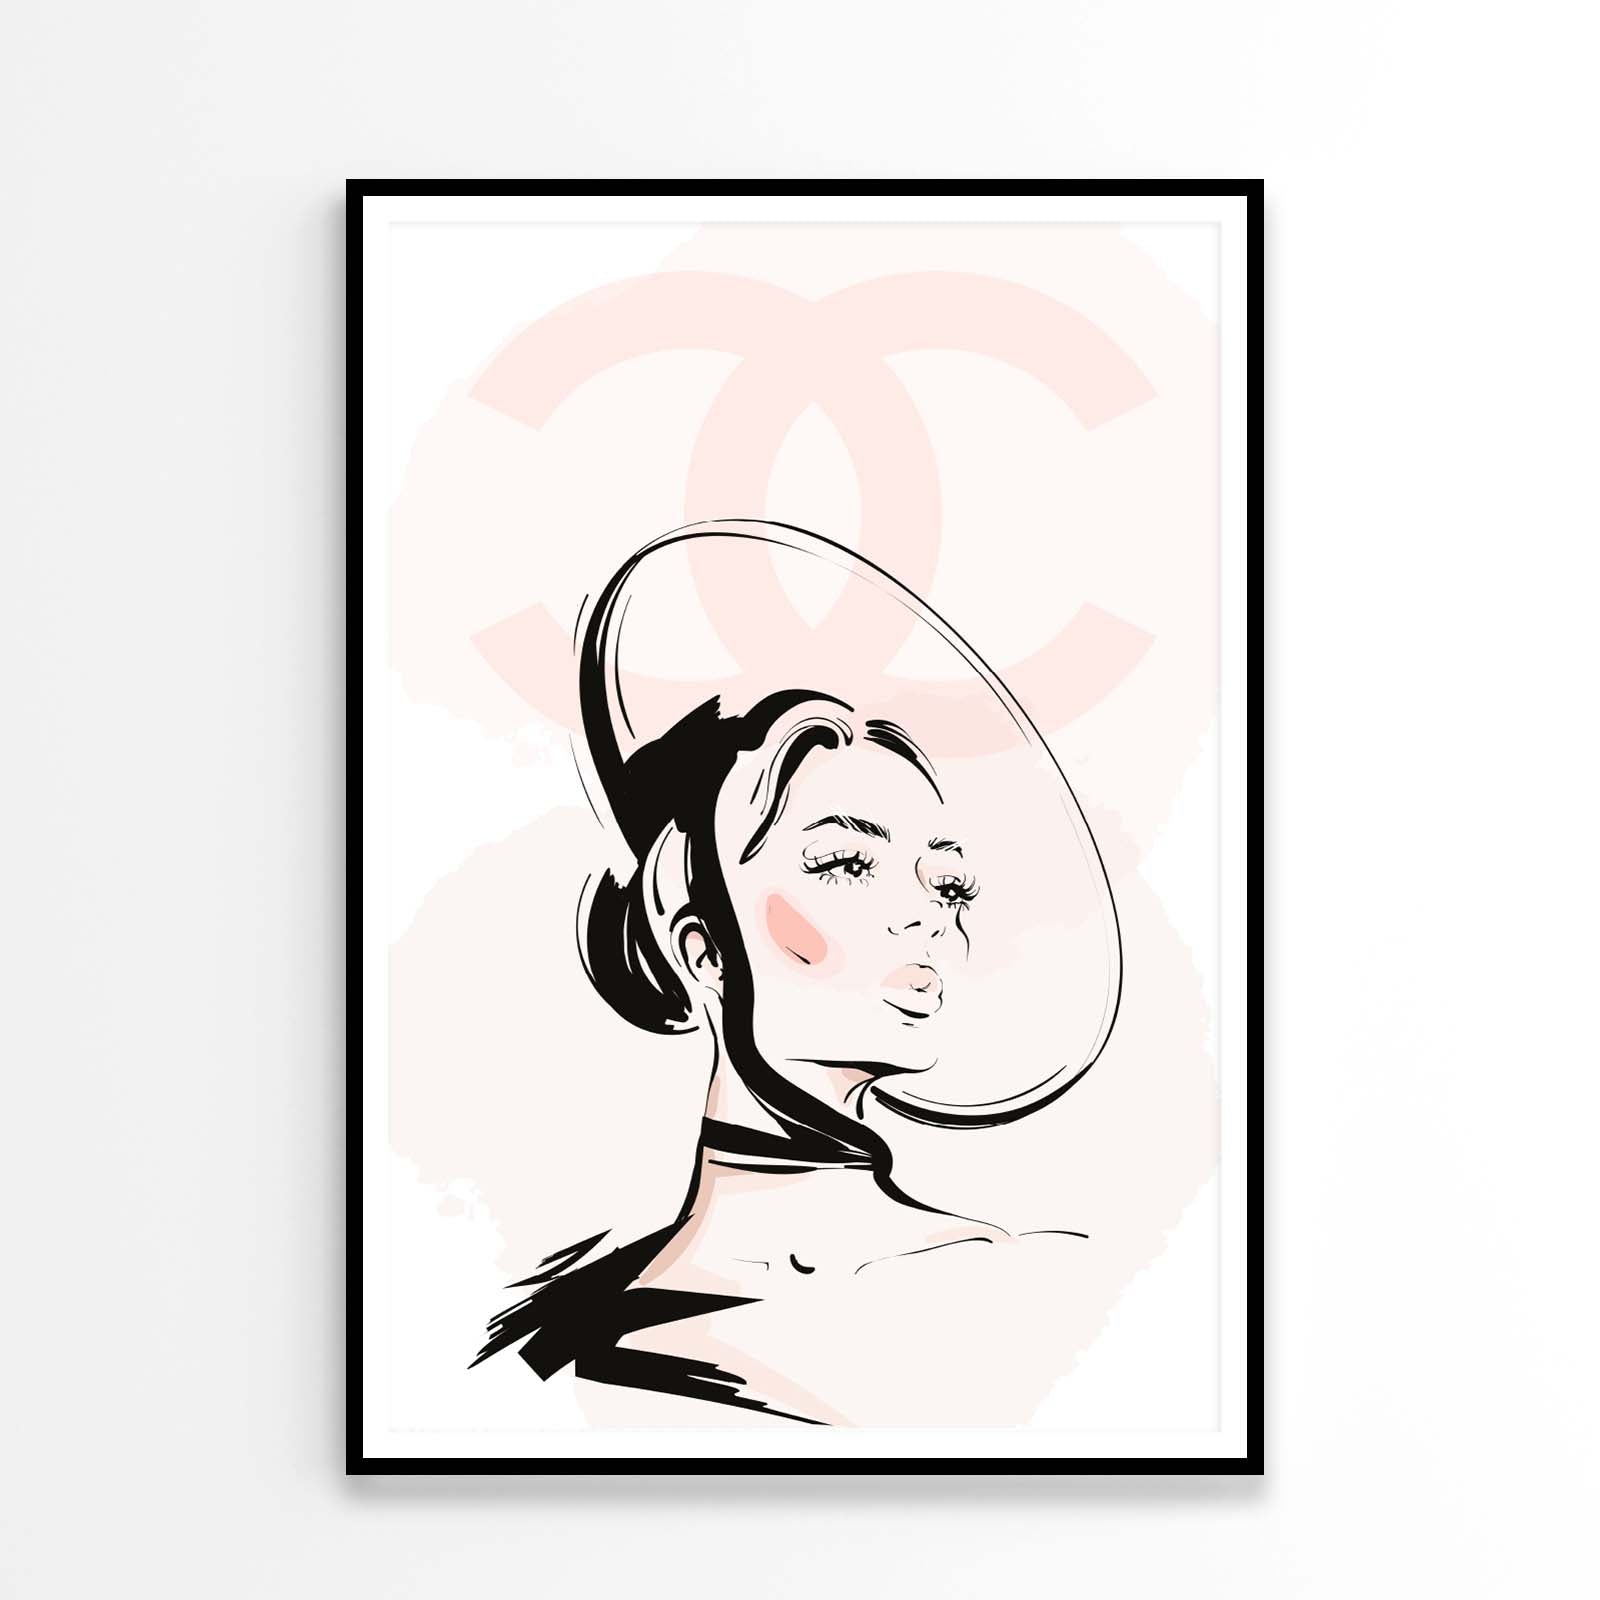 Stylish Black Peach Colored Girl Art Design Home Decor Premium Quality Poster Print Choose Your Sizes